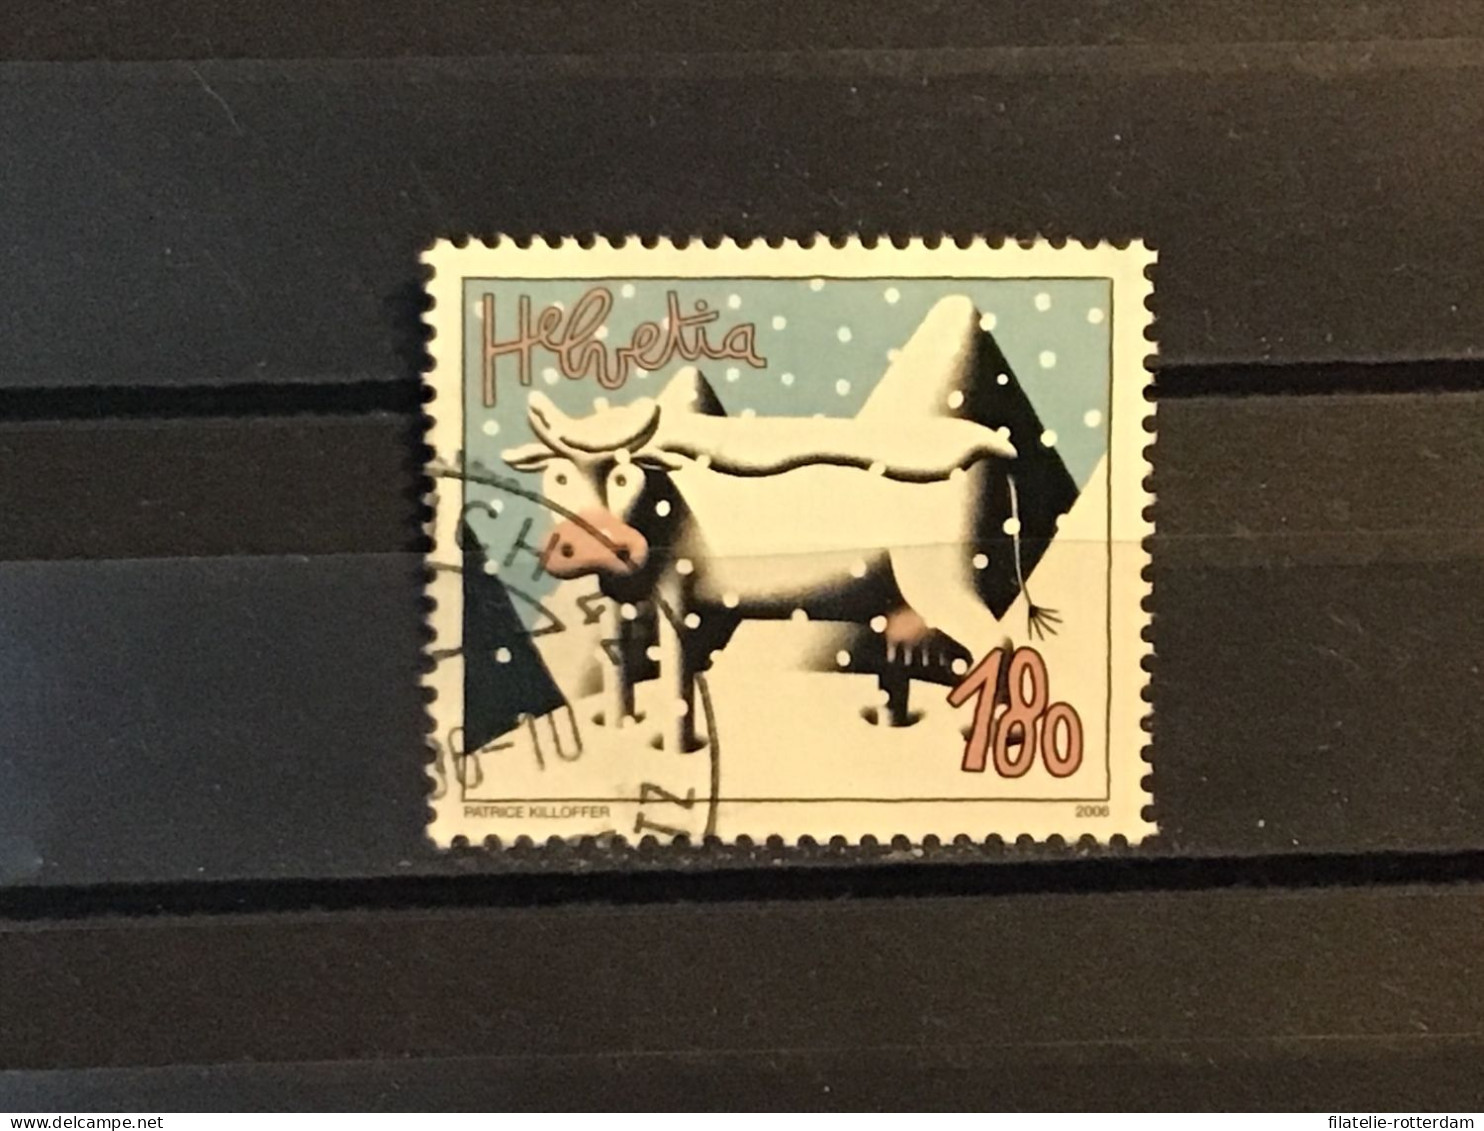 Switzerland / Zwitserland - Cow (180) 2006 - Usati